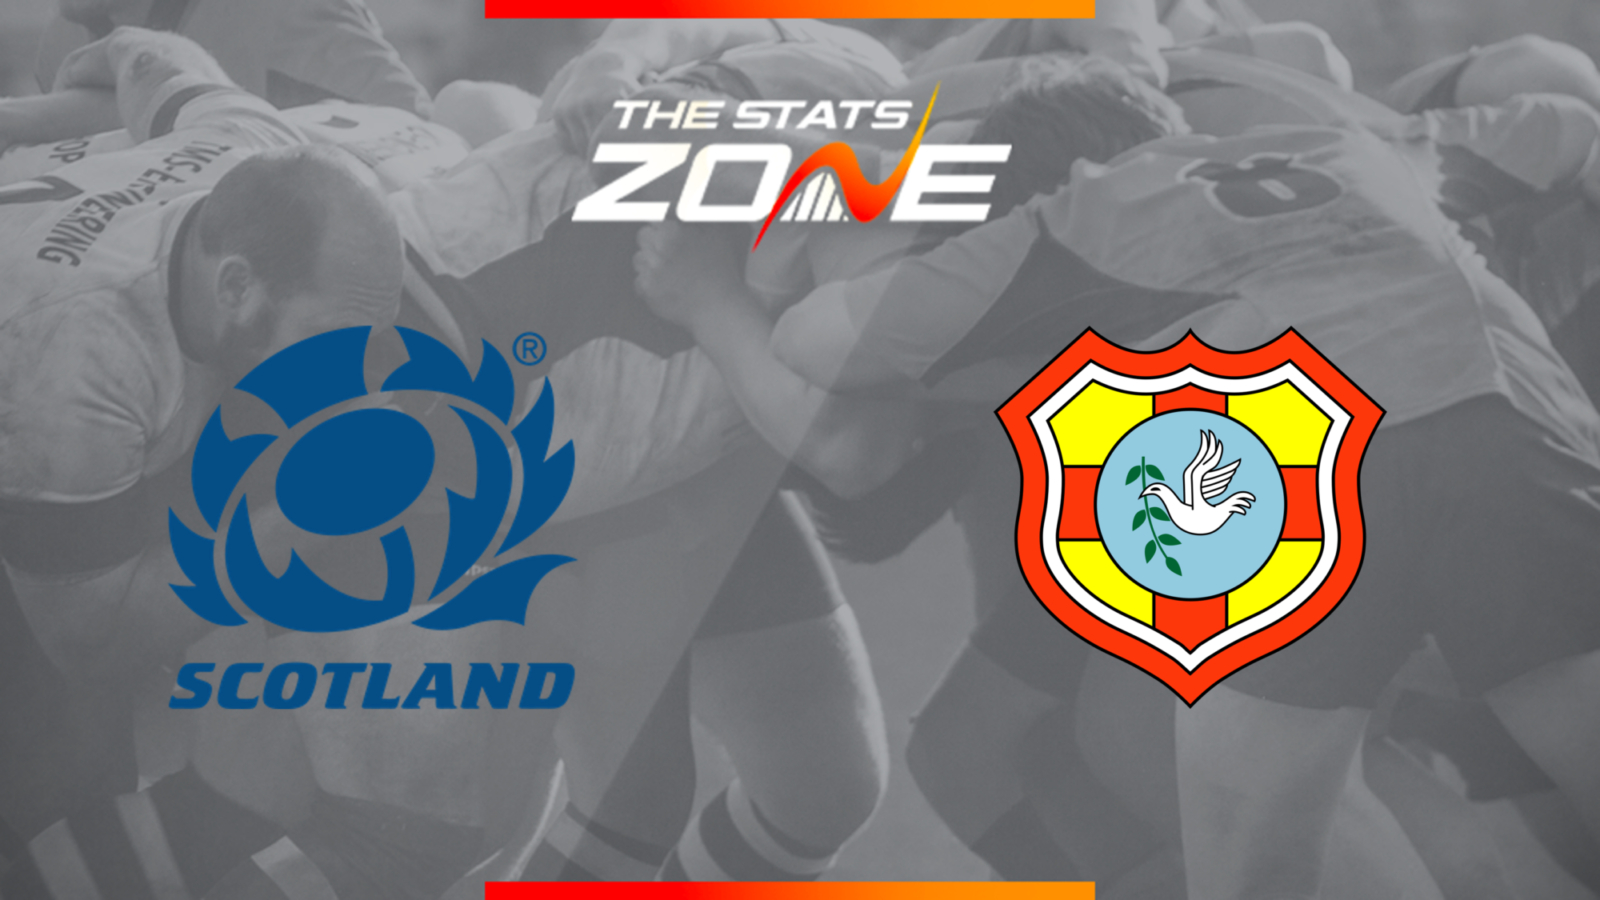 2021 Autumn Nations Series Scotland vs Tonga Preview & Prediction